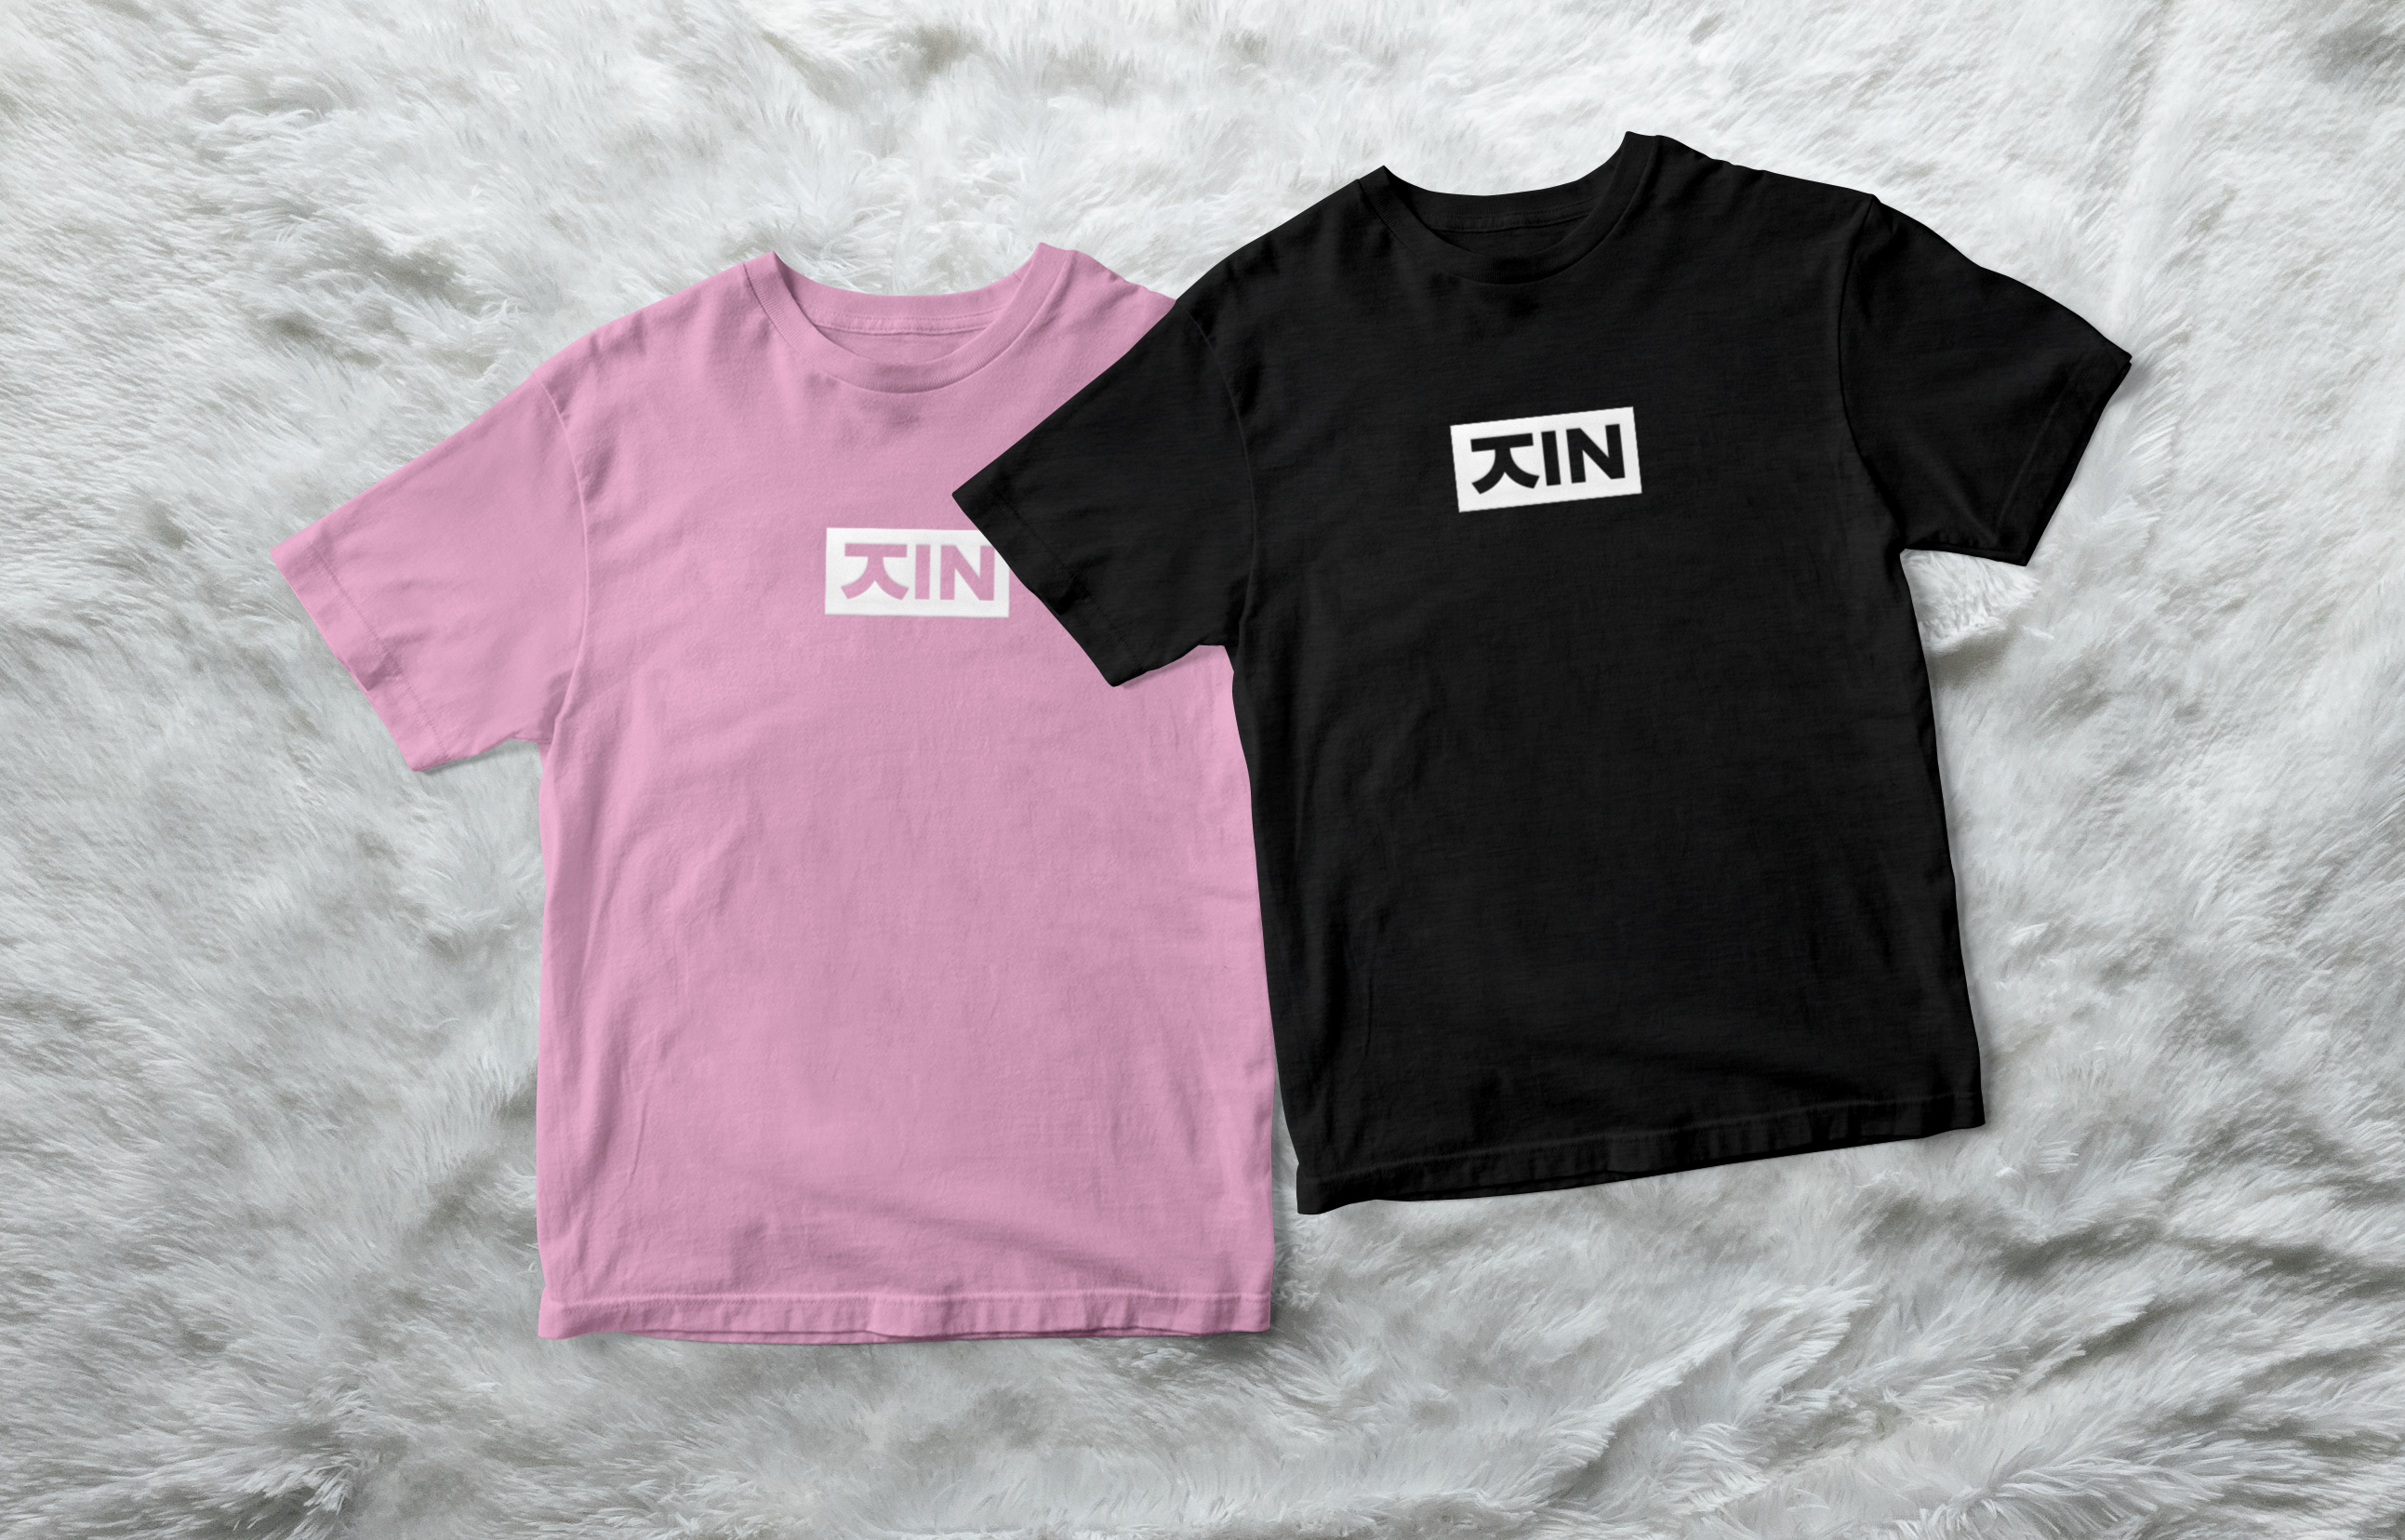 Jin Bias Shirts and Hoodies